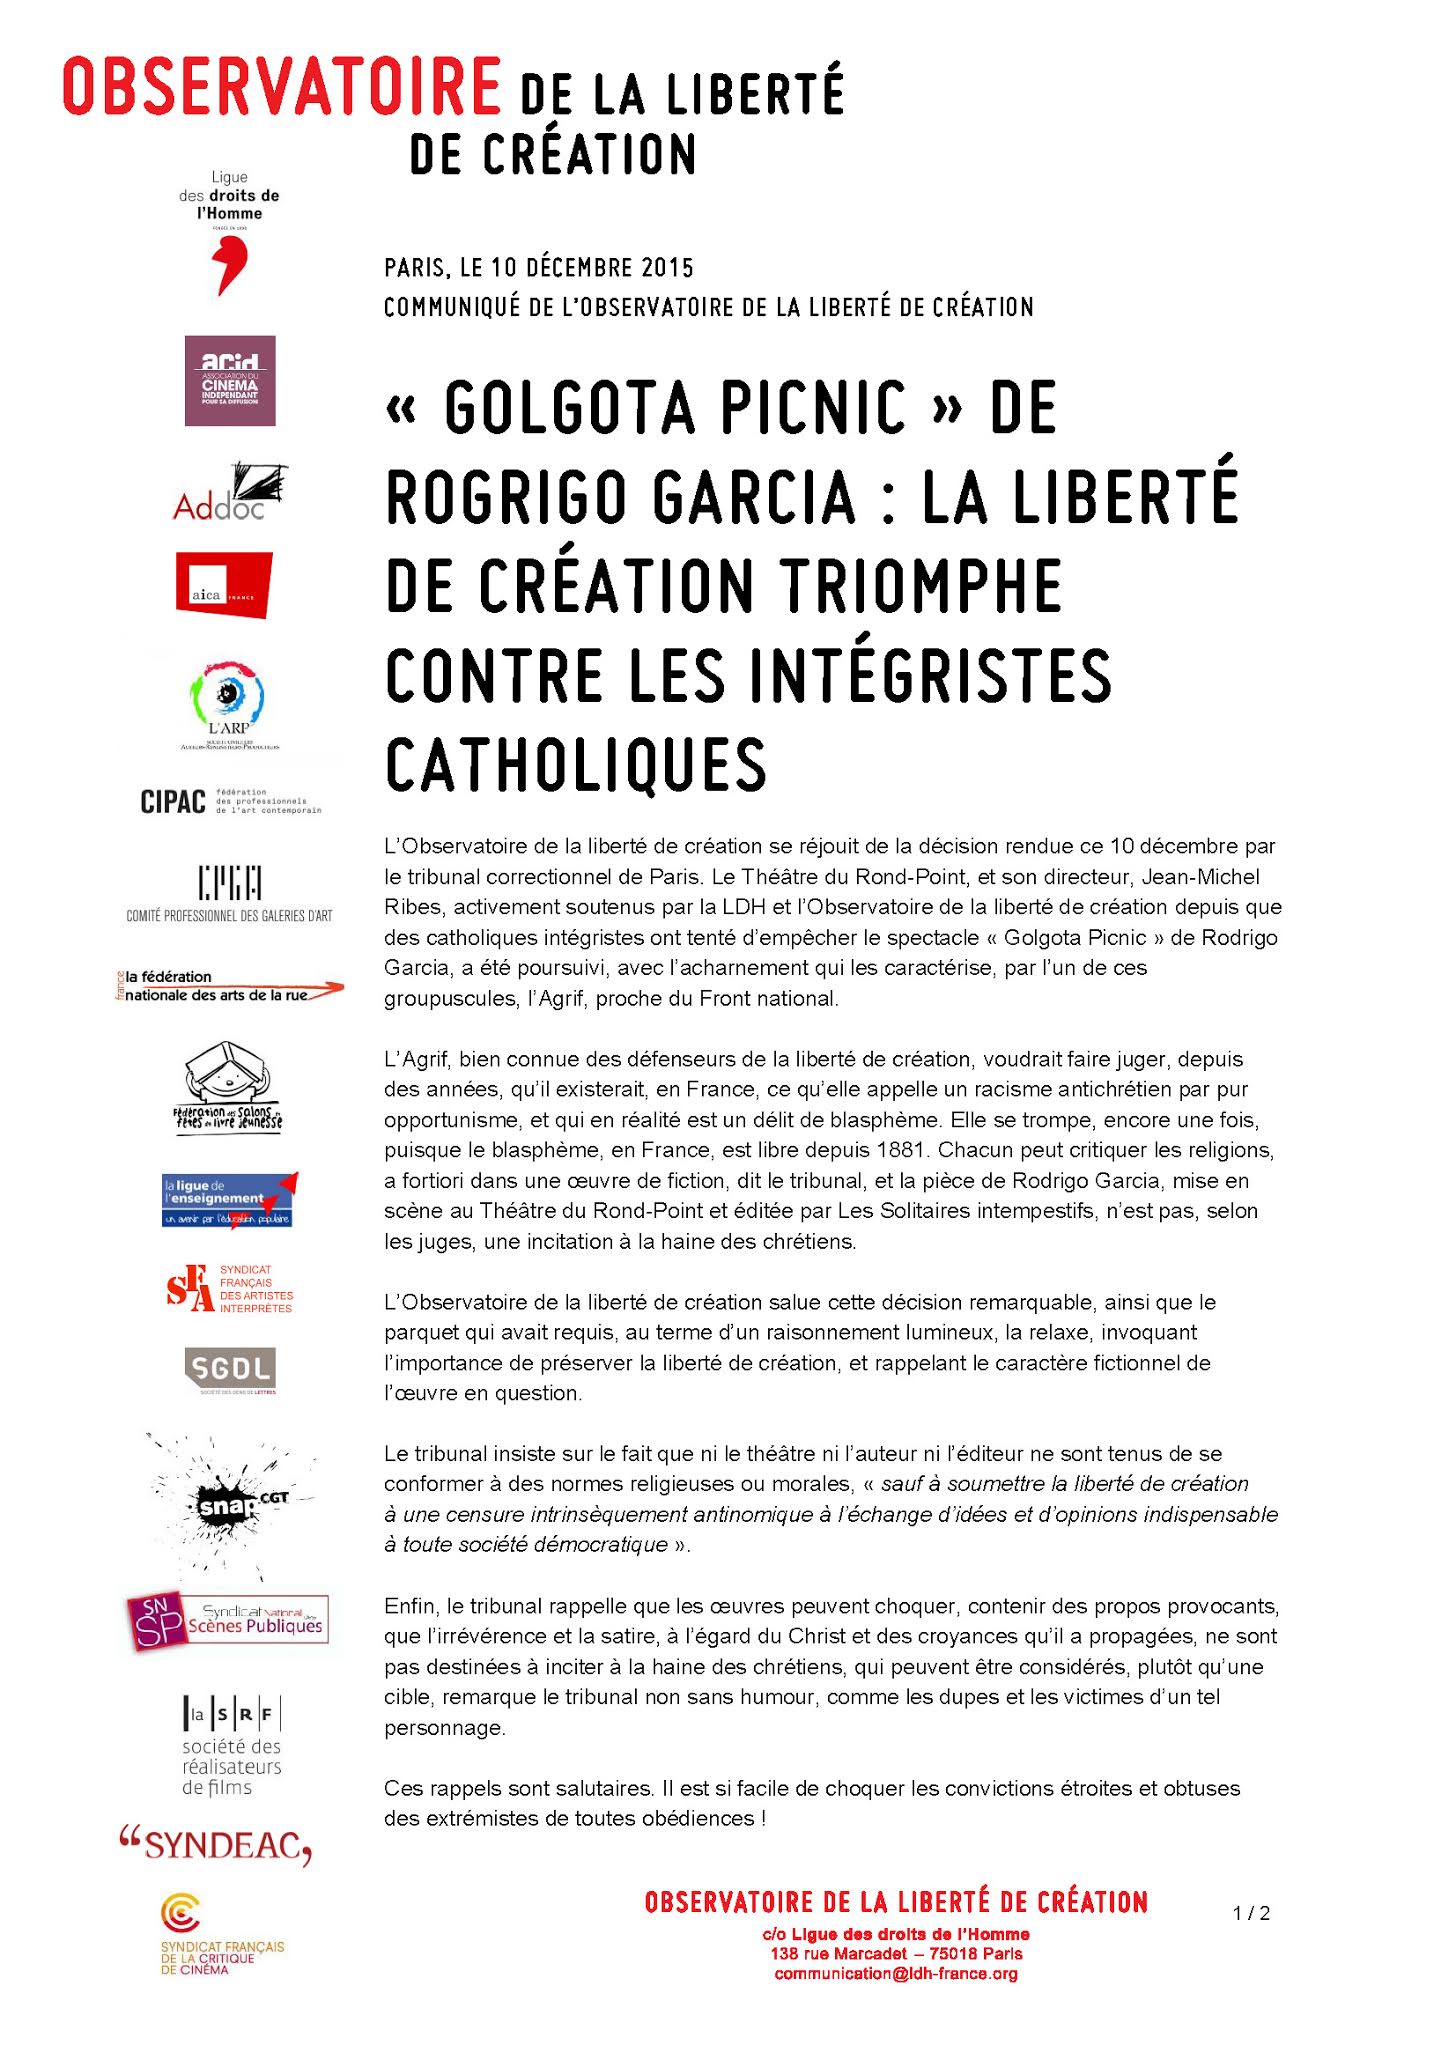 Golgota Picnic de Rodrigo Garcia : la liberté de création triomphe contre les intégristes catholiques